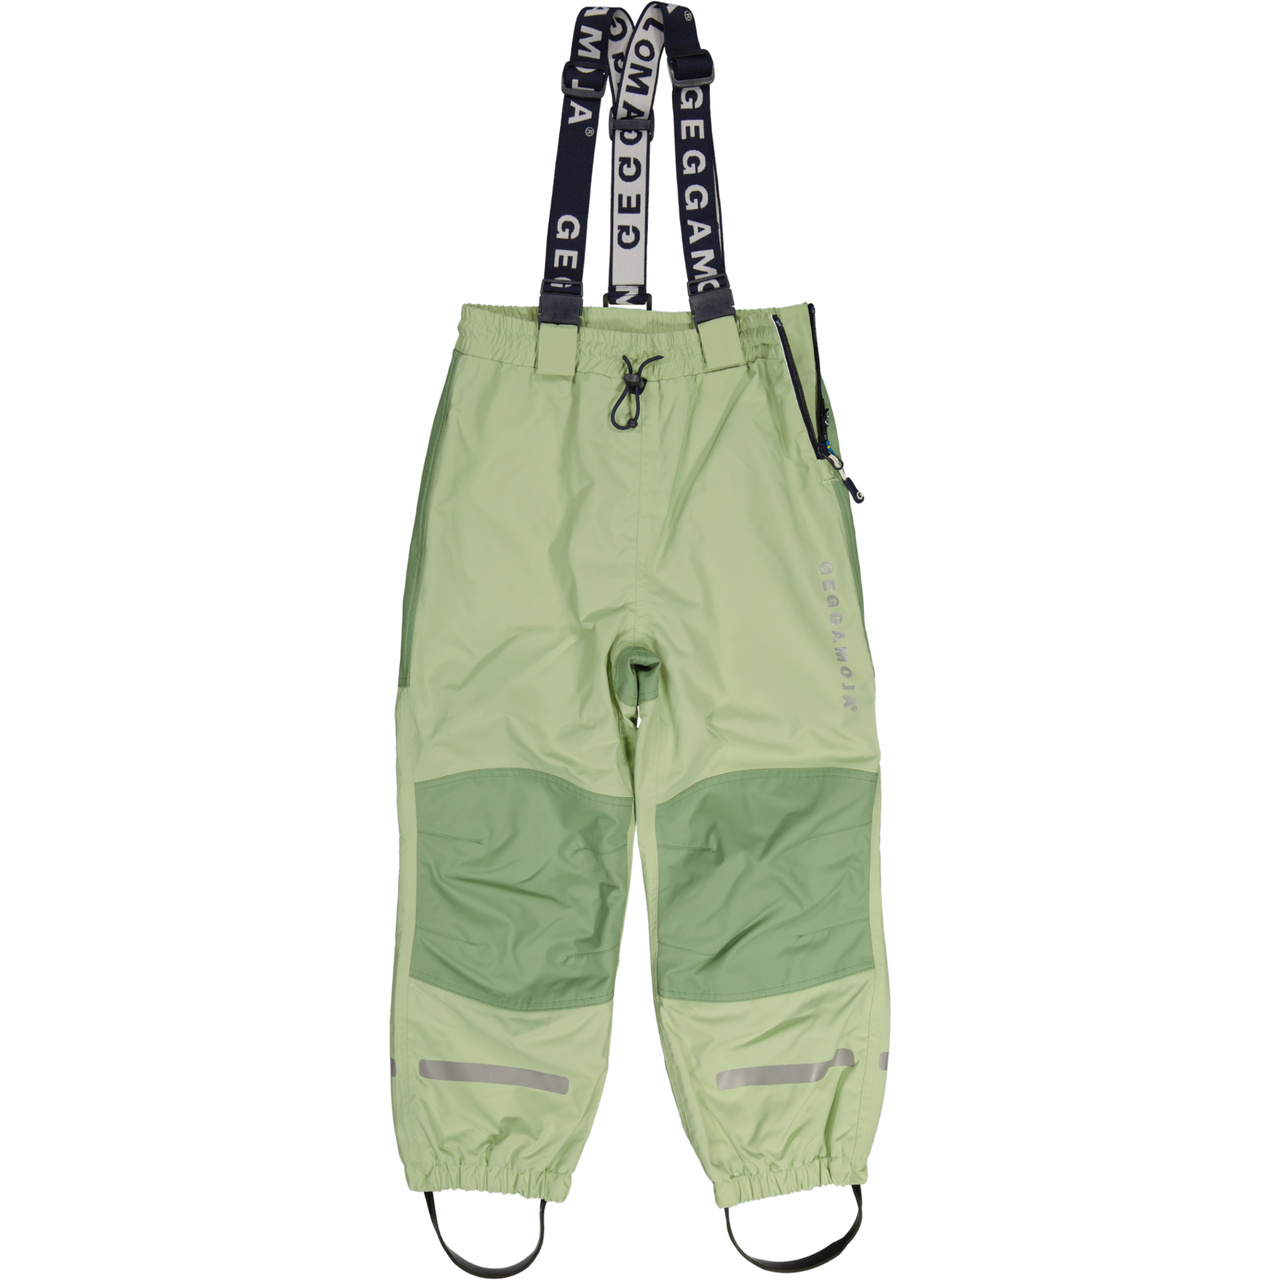 Shell pants Green 74/80